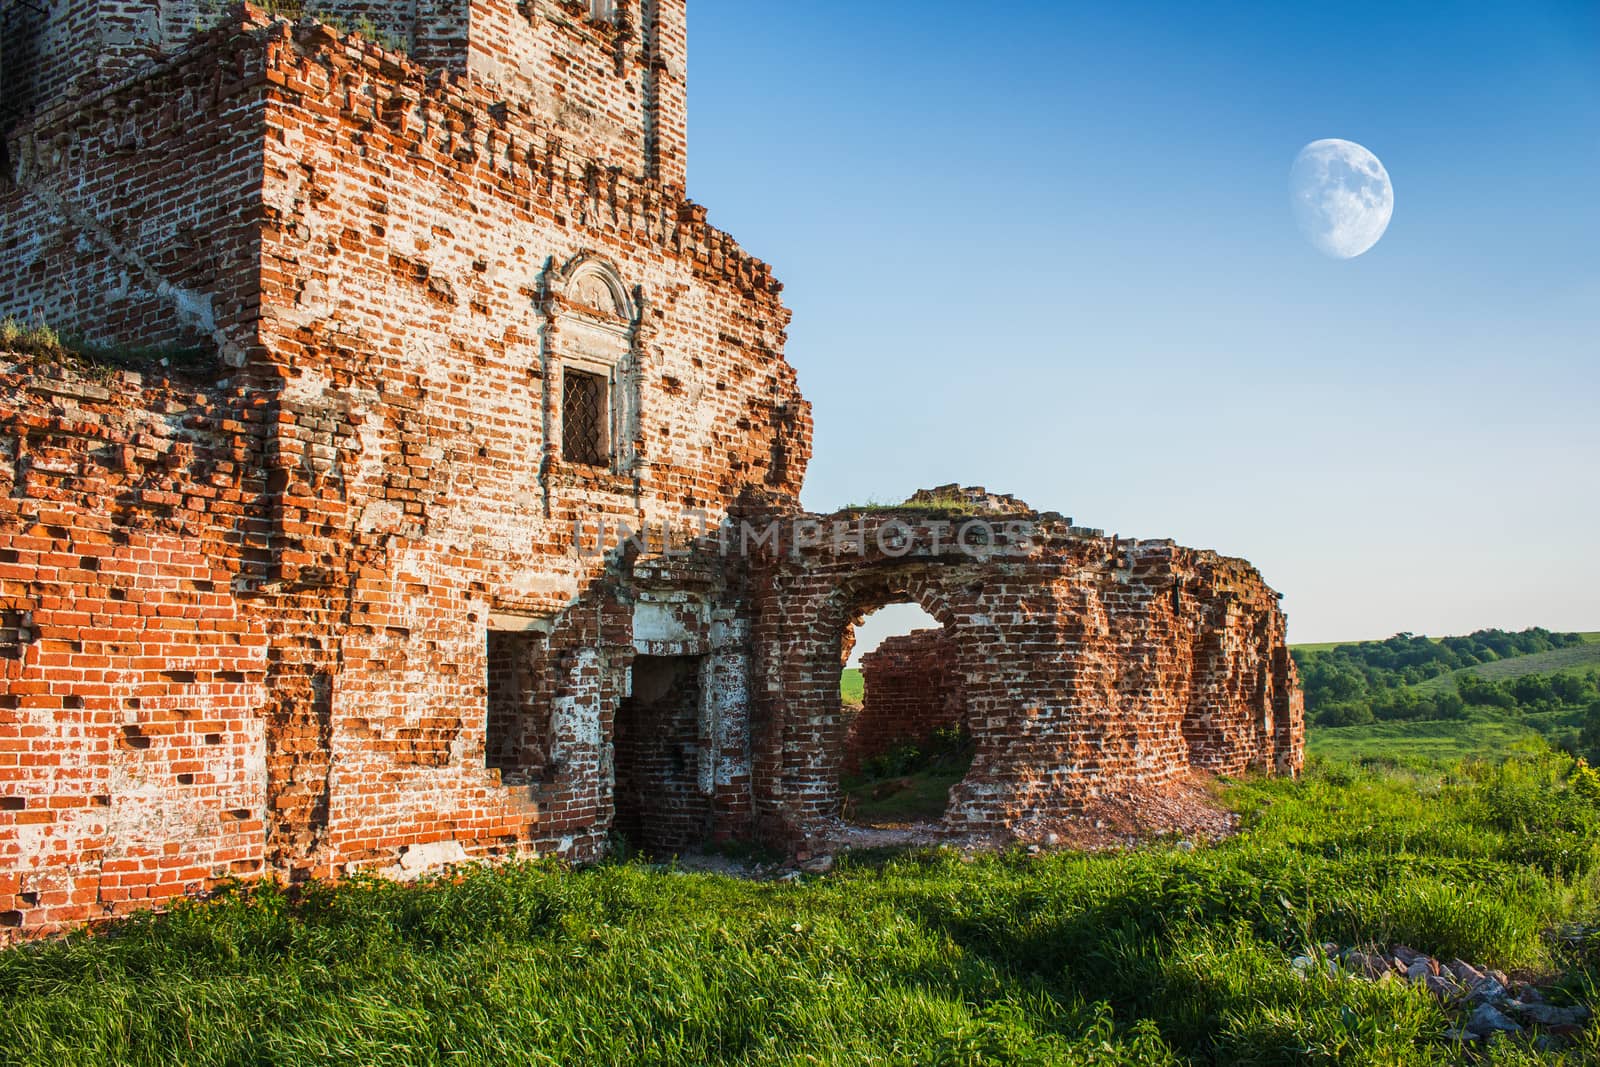 ruined ancient church by oleg_zhukov